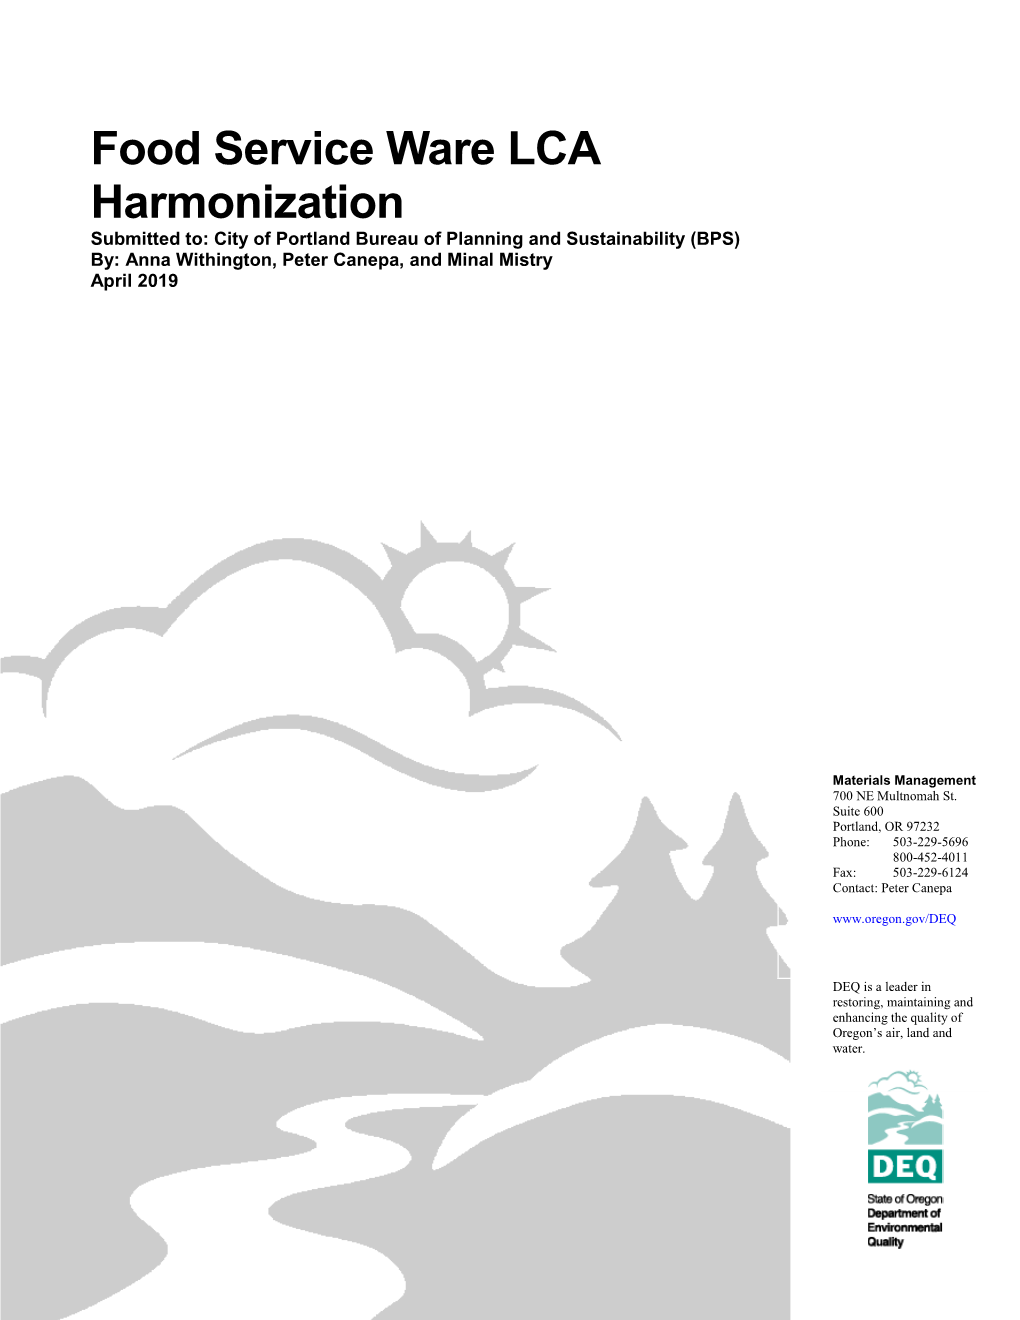 Food Service Ware LCA Harmonization Report